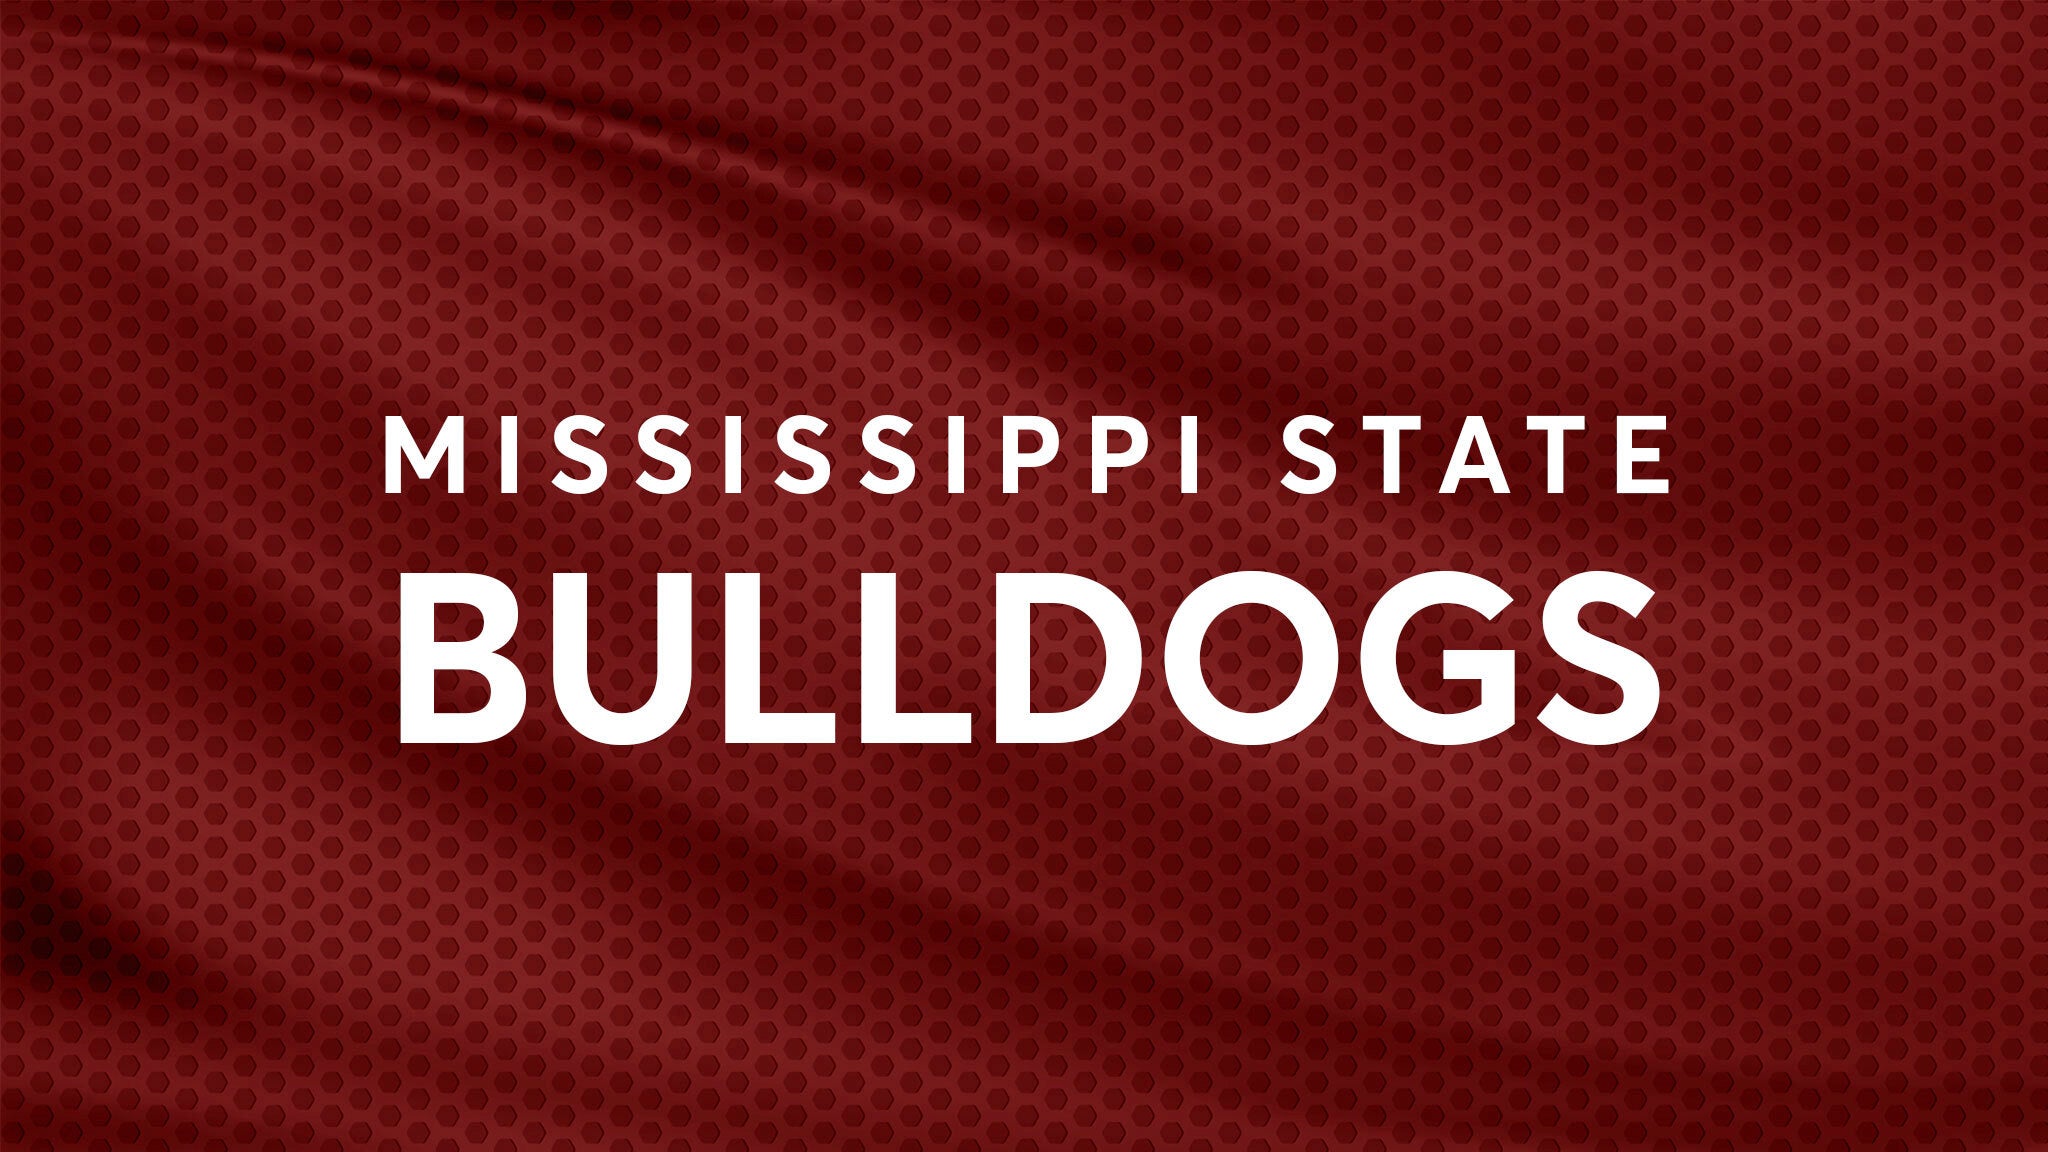 Mississippi State Bulldogs Football vs. Florida Gators Football hero